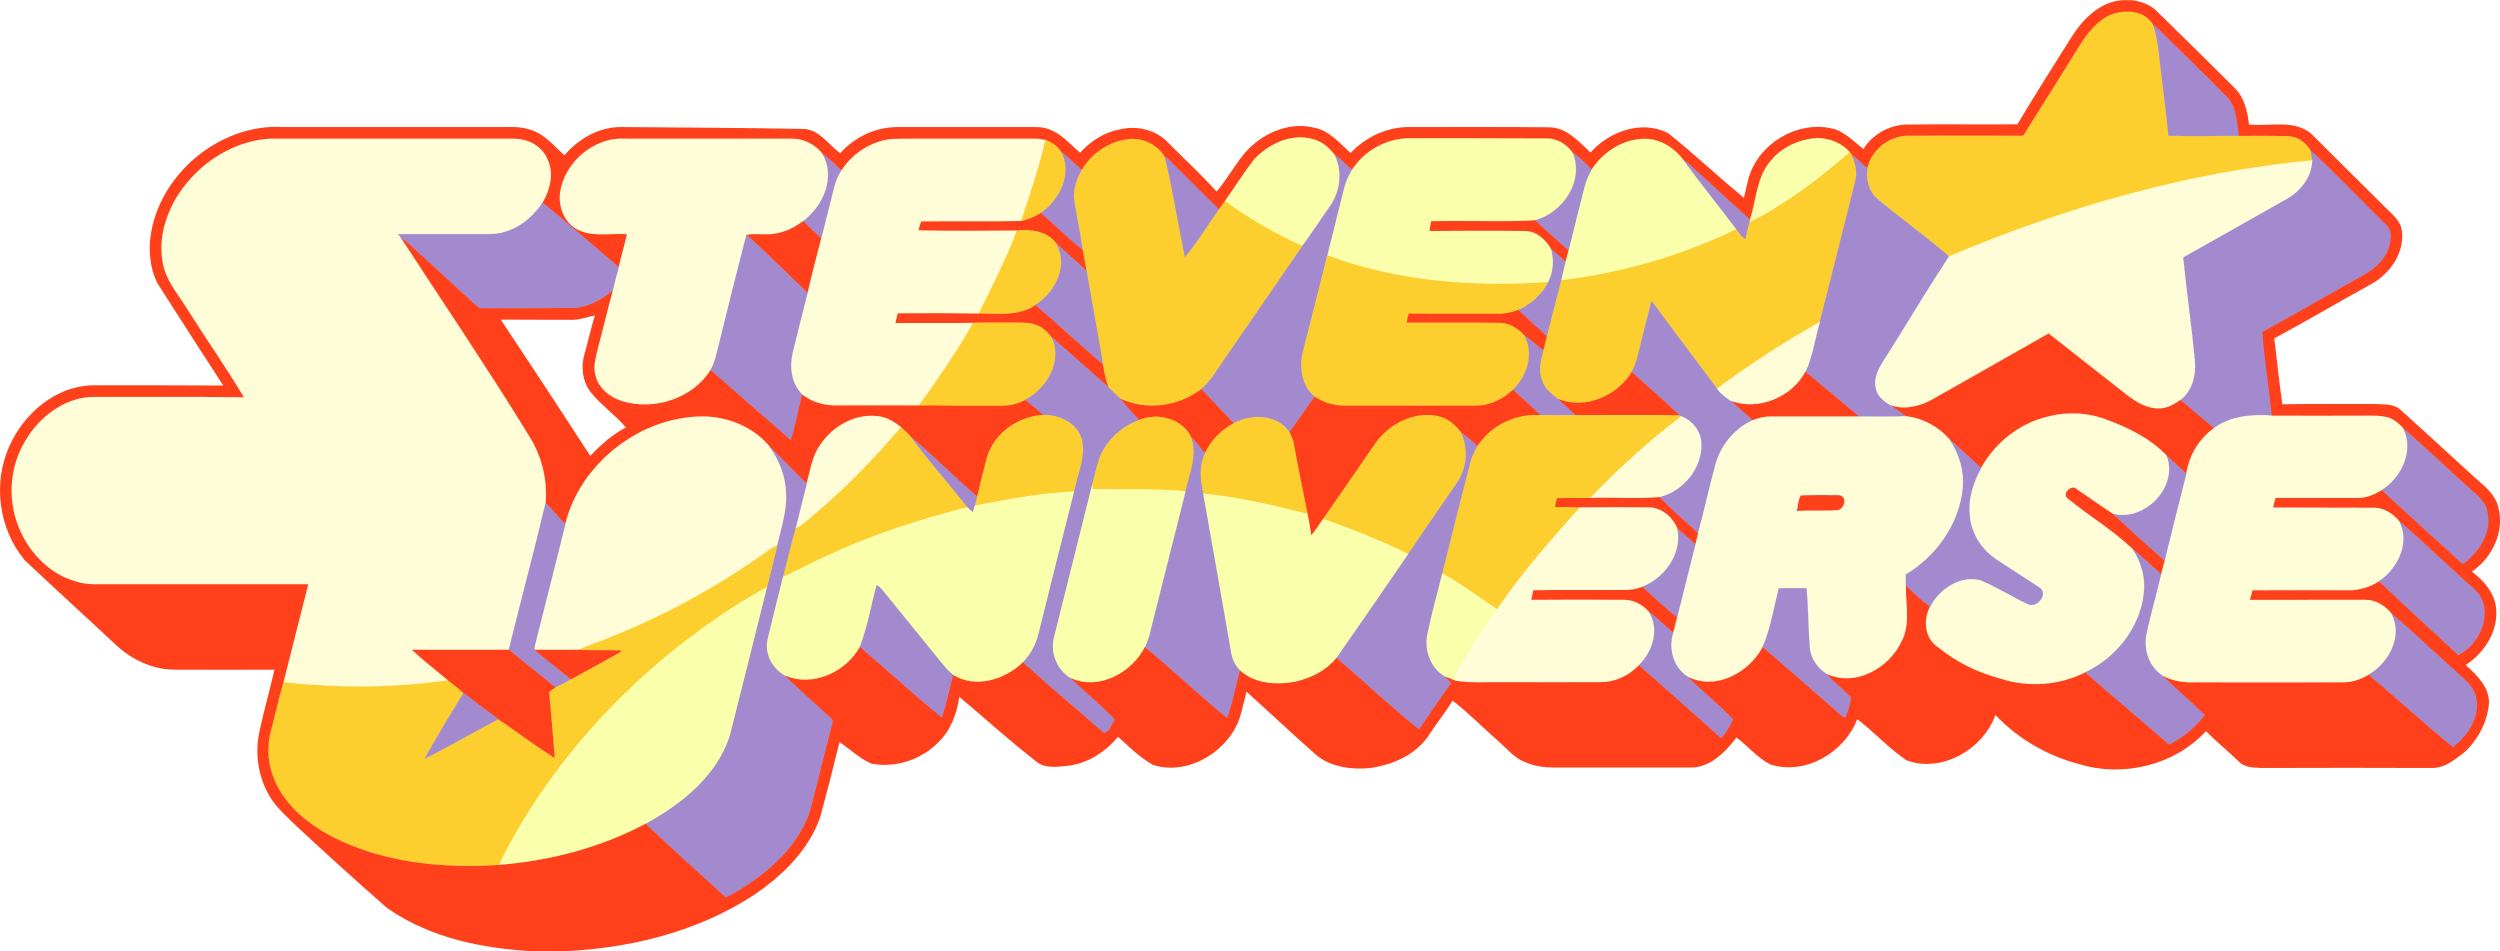 High Quality Steven Universe Logo Blank Meme Template